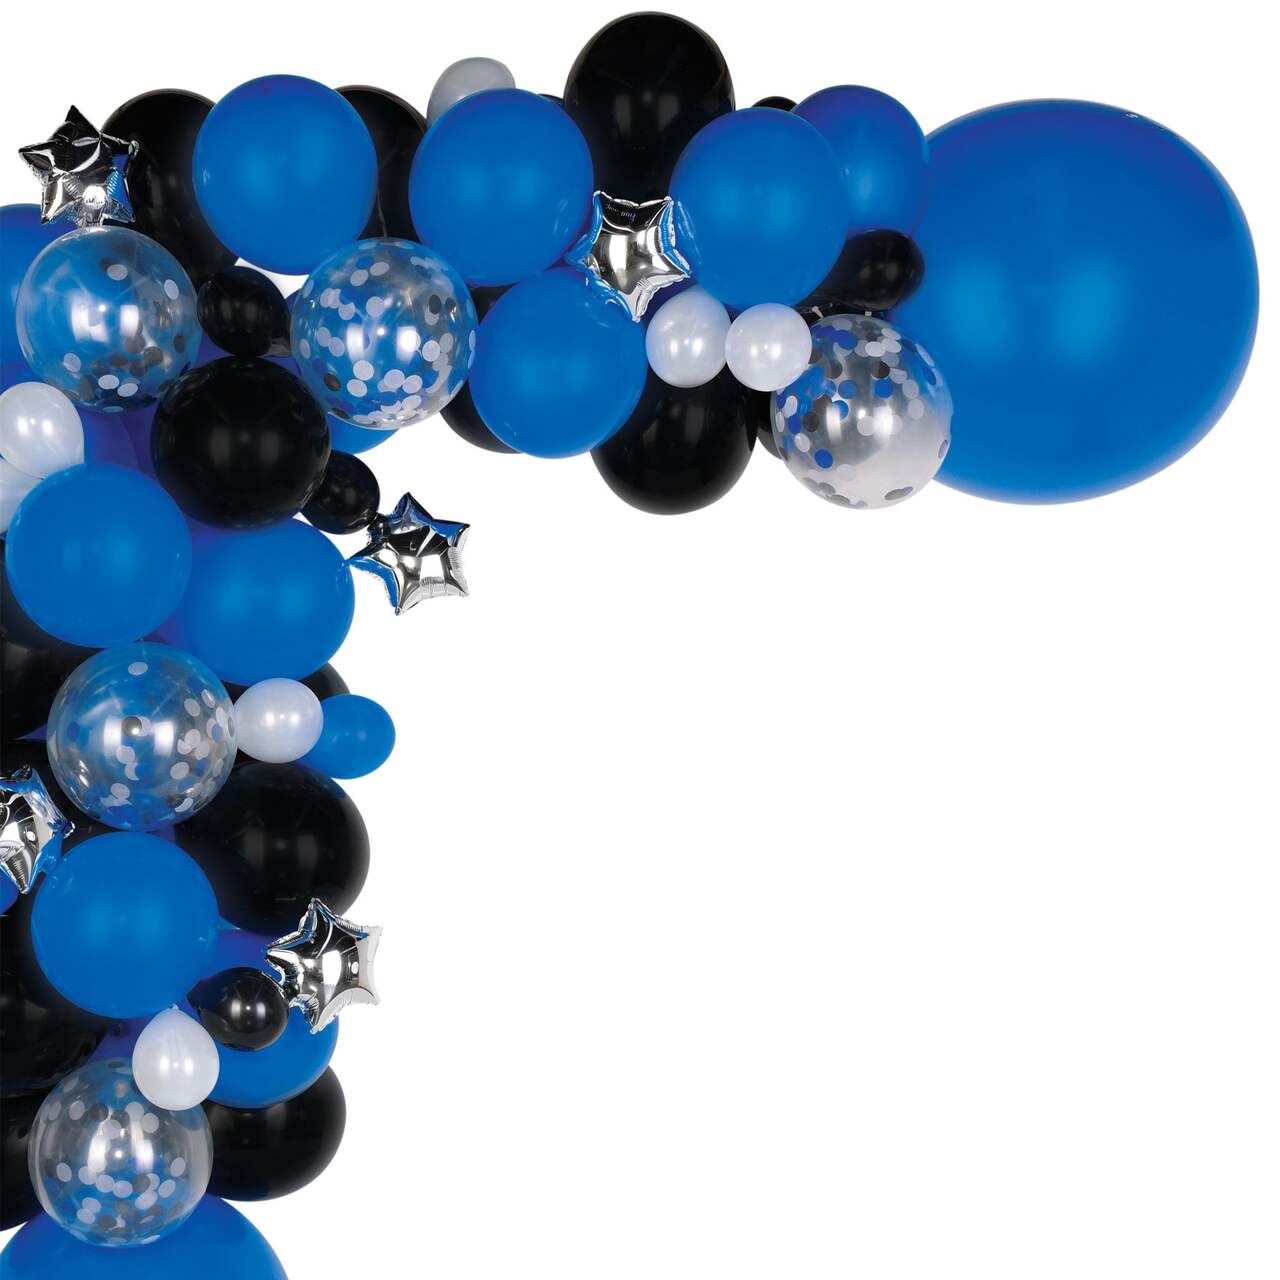 Blue Candy Box Glue Dots Balloon Adhesive